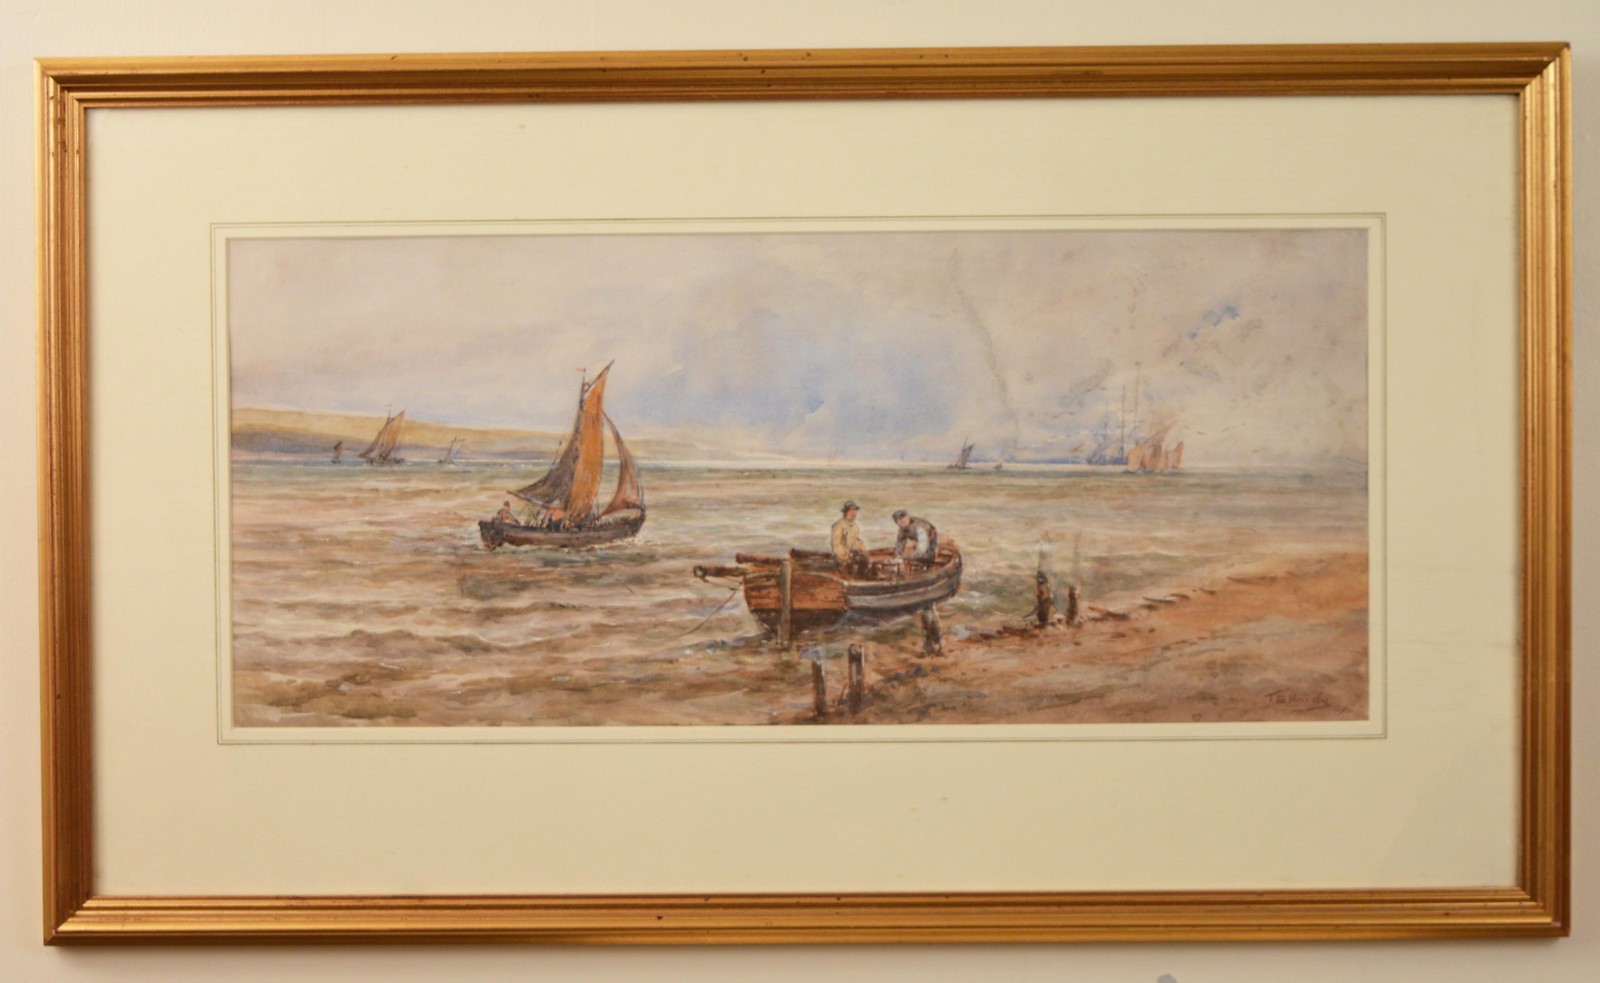 Fishing boats in an estuary, watercolour, bears signature 'T.B. Hardy', dated (18)79, 23 x 54 cm (